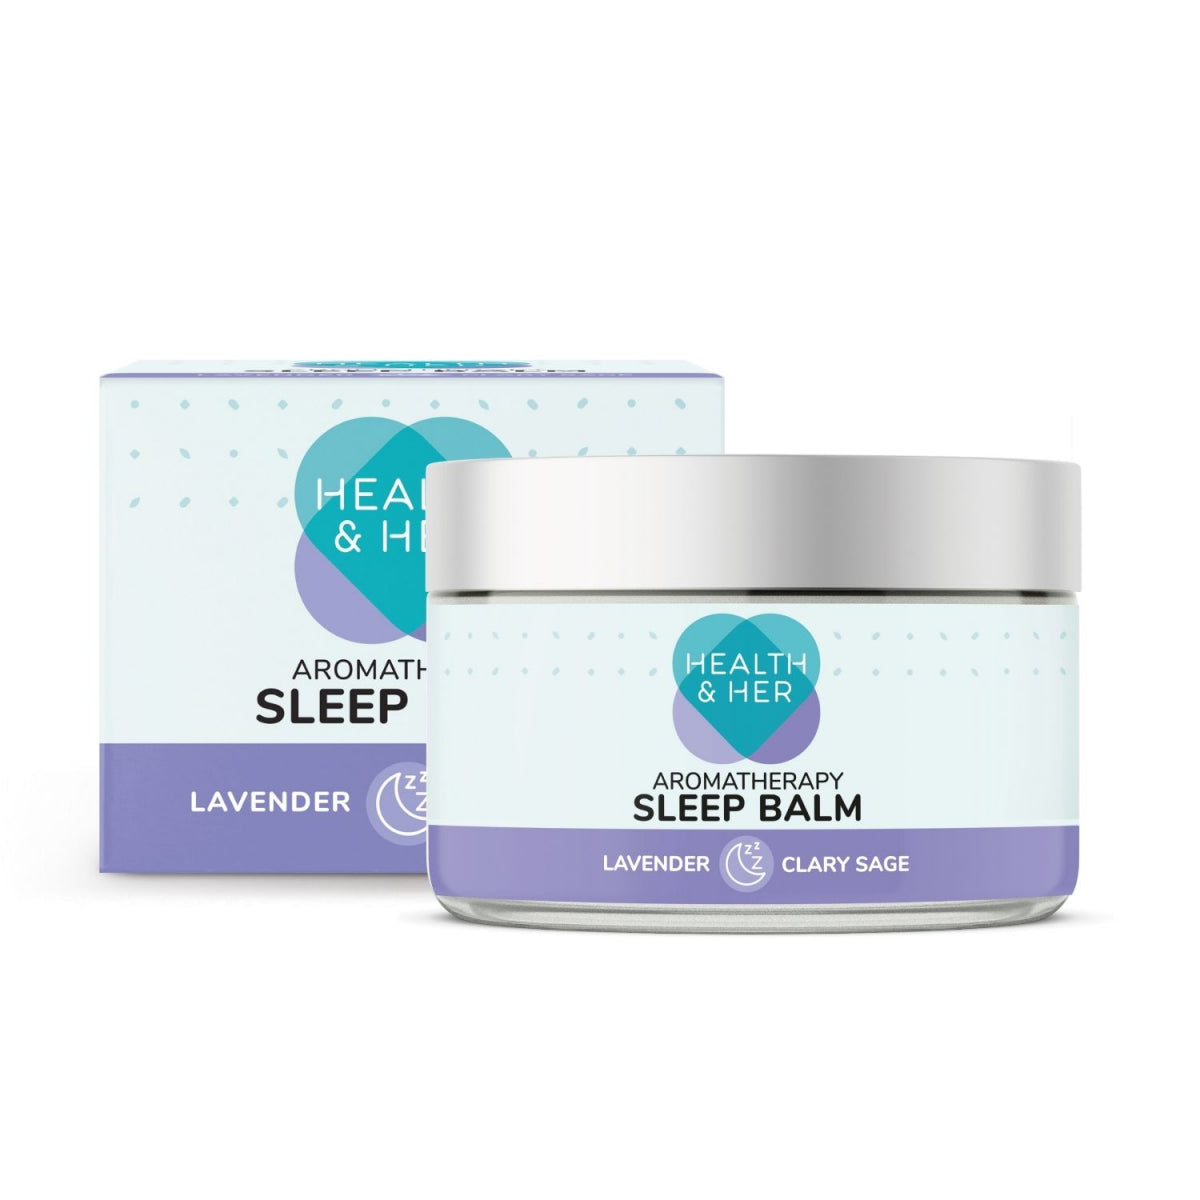 Health & Her Aromatherapy Sleep Balm 40g